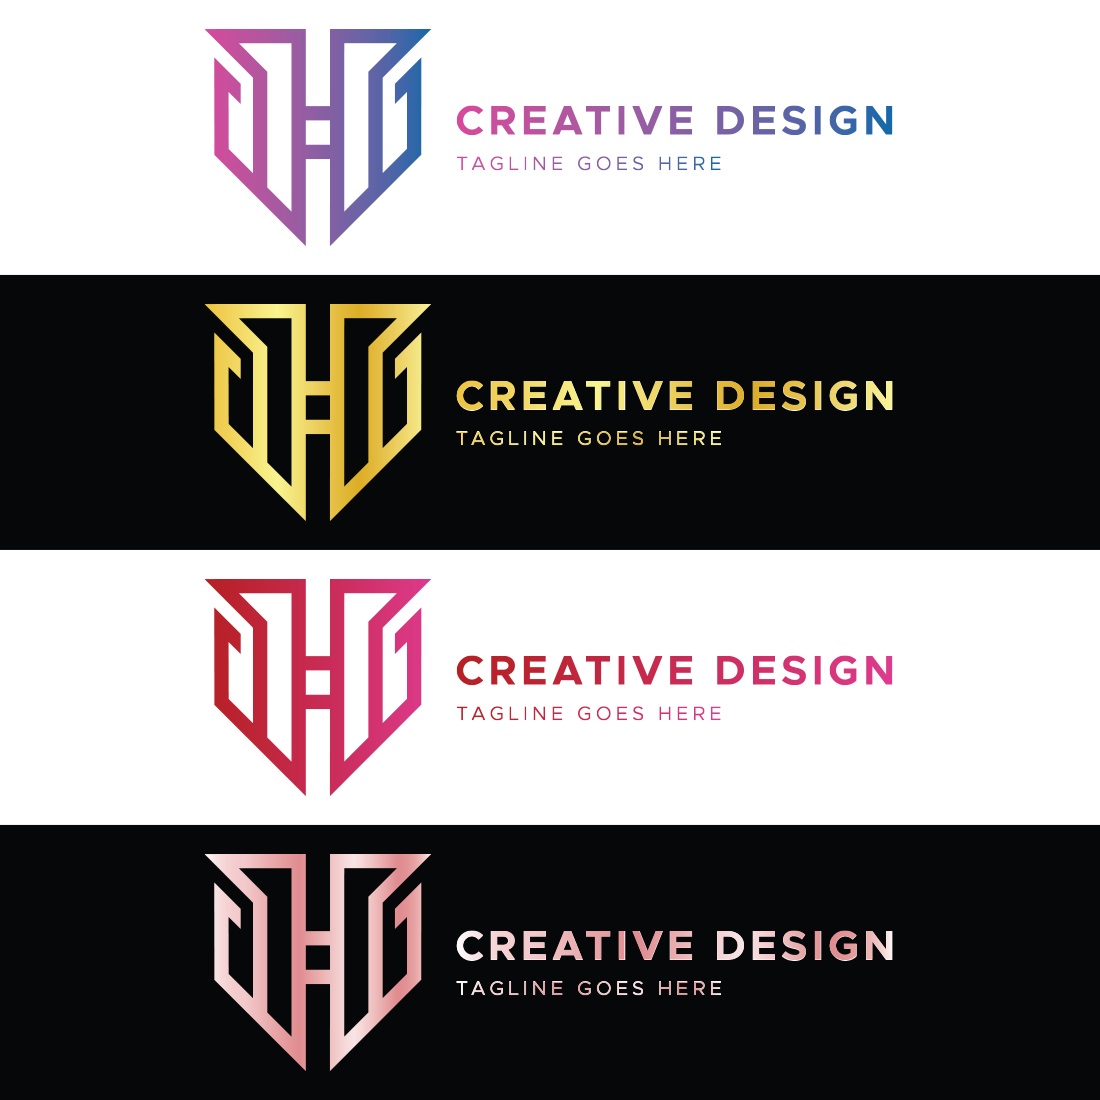 MH Letter Logo Design cover image.